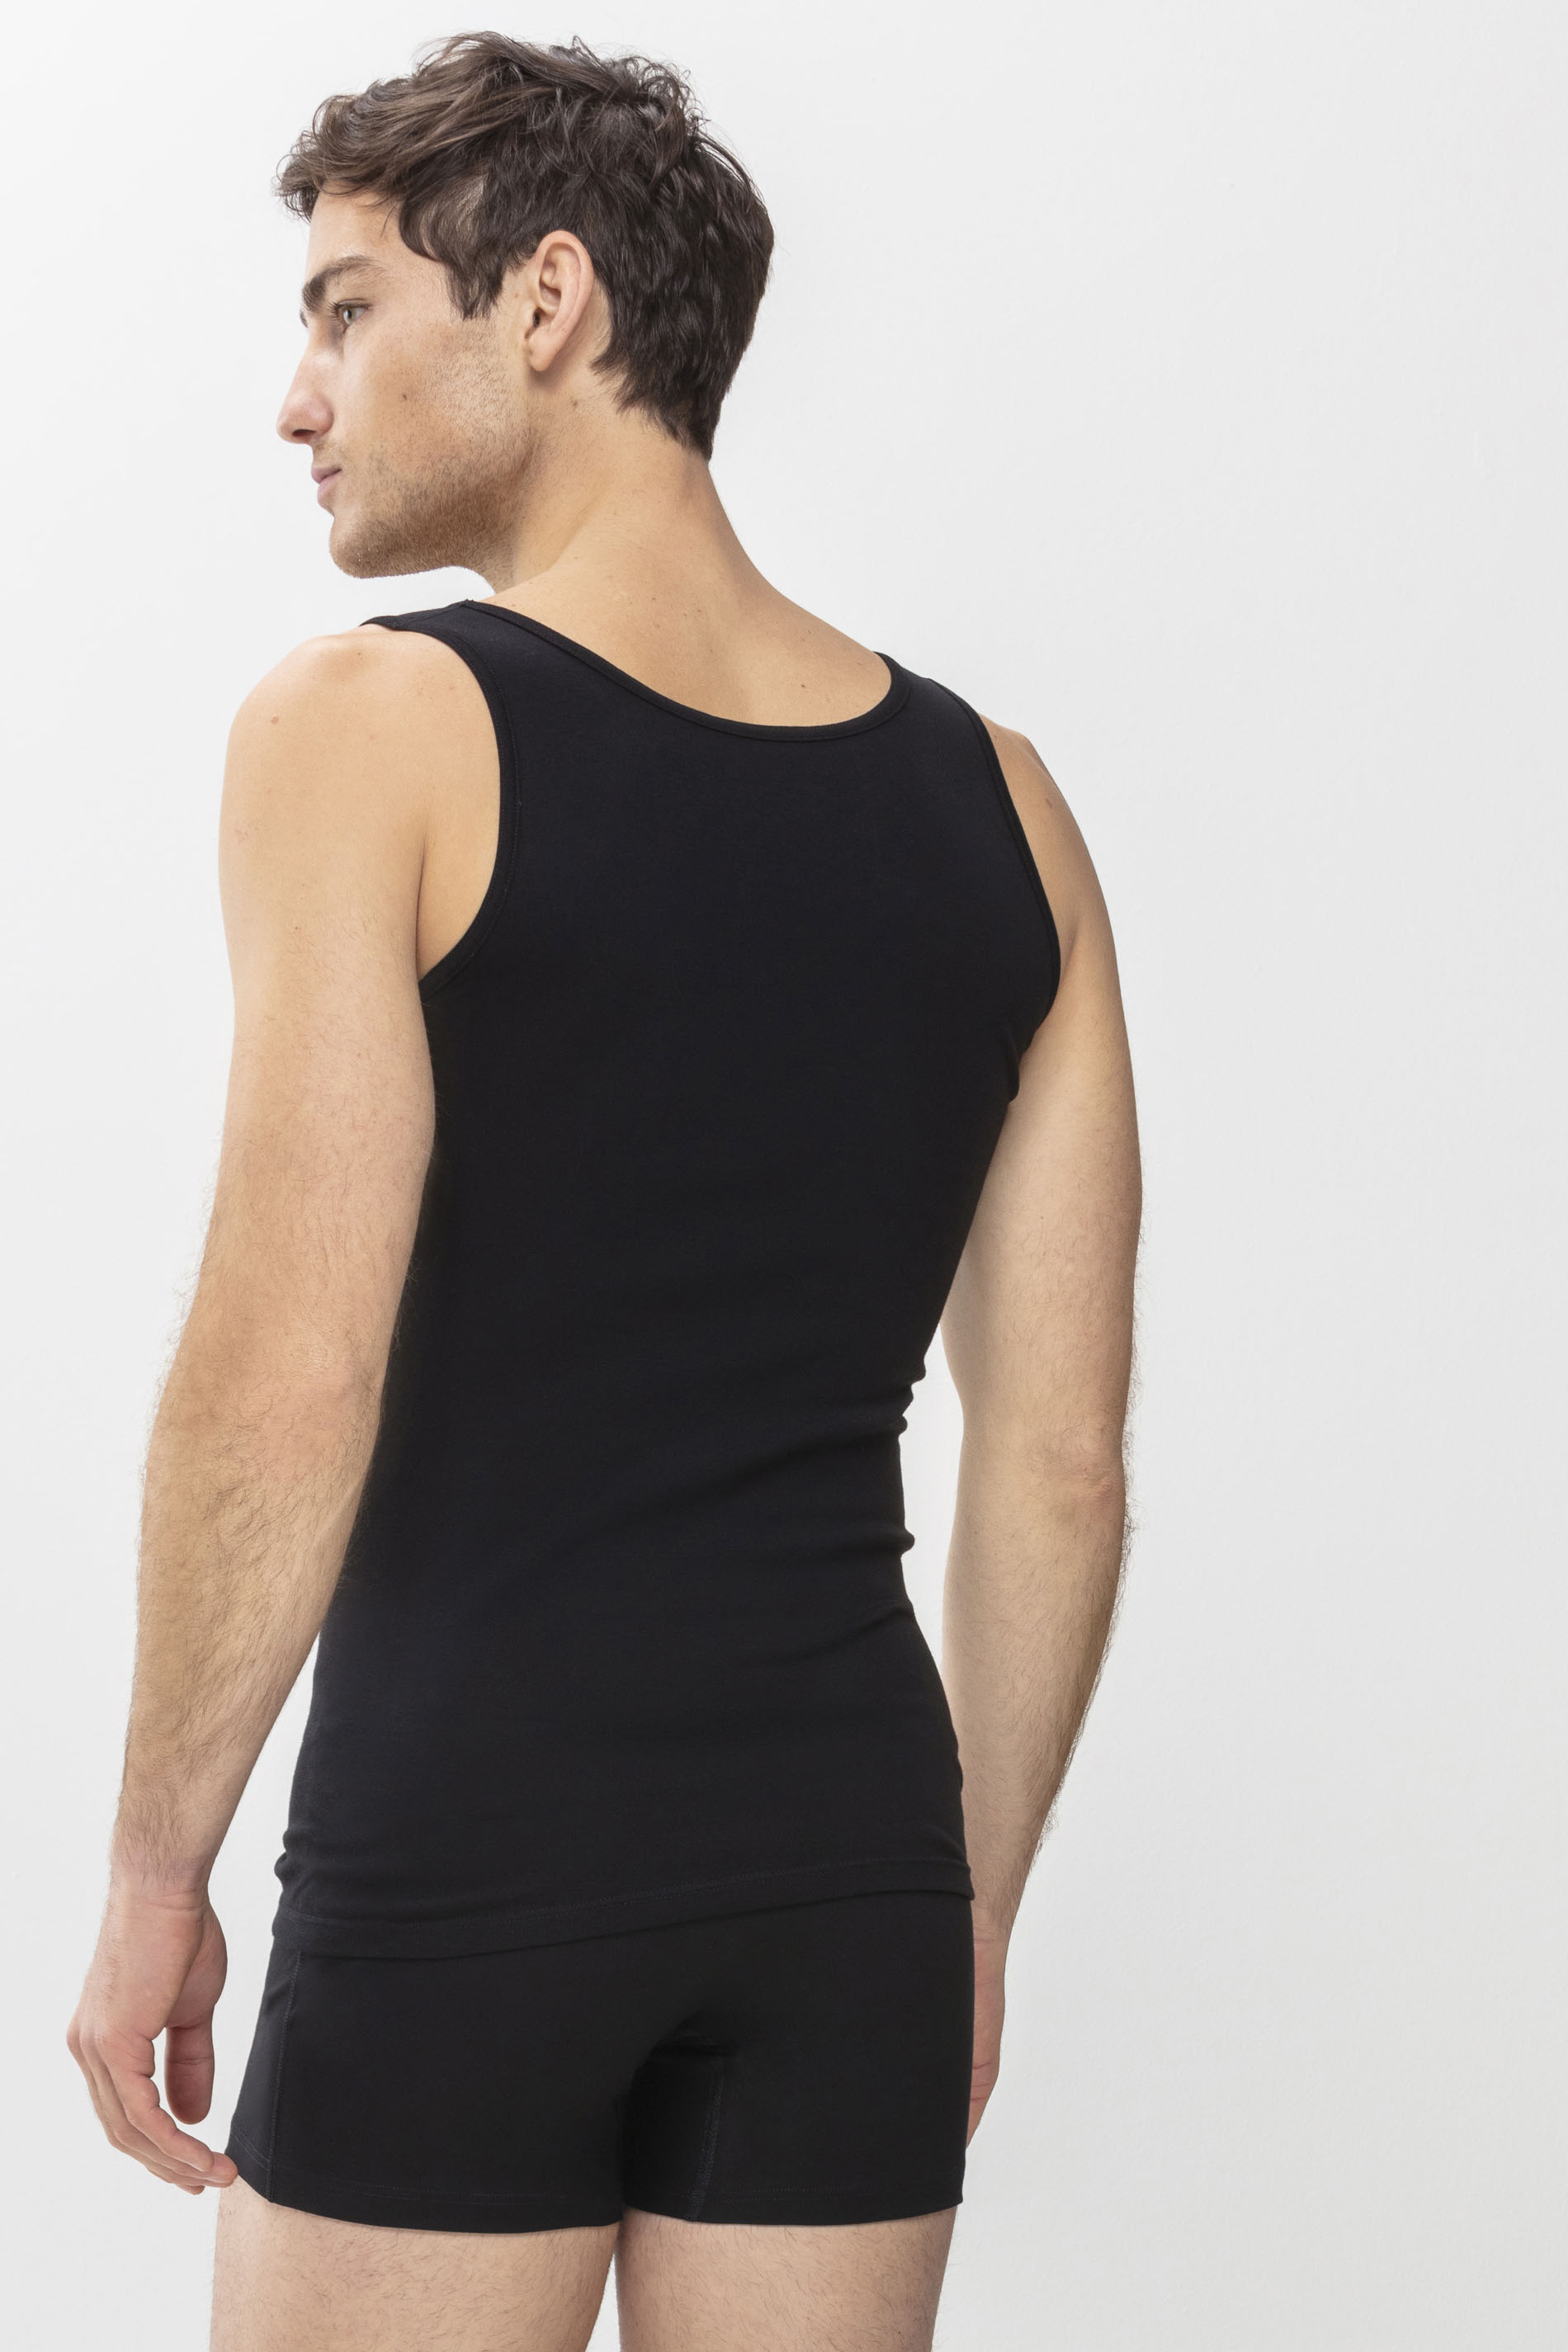 Athletic-Shirt Zwart Serie Casual Cotton Achteraanzicht | mey®